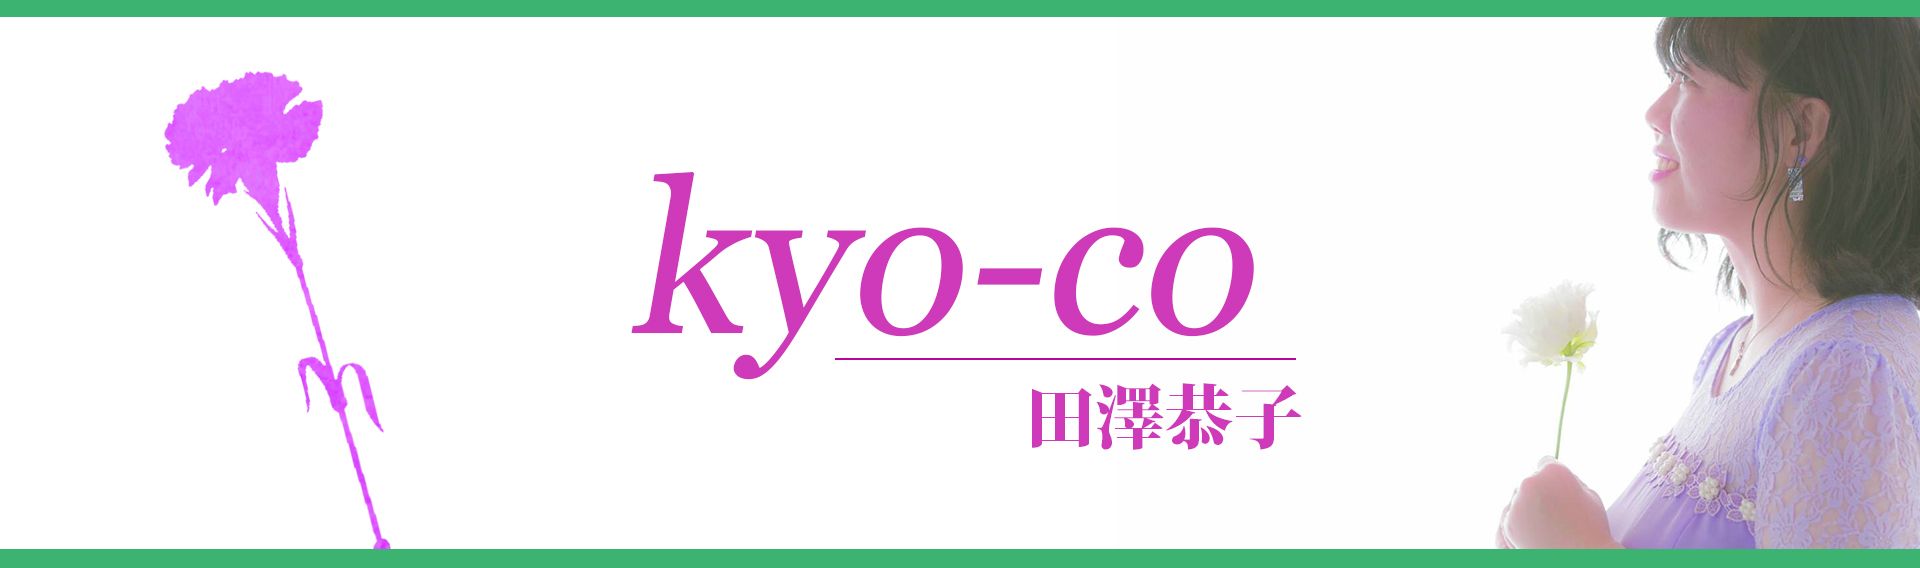 kyo-co (田澤恭子)